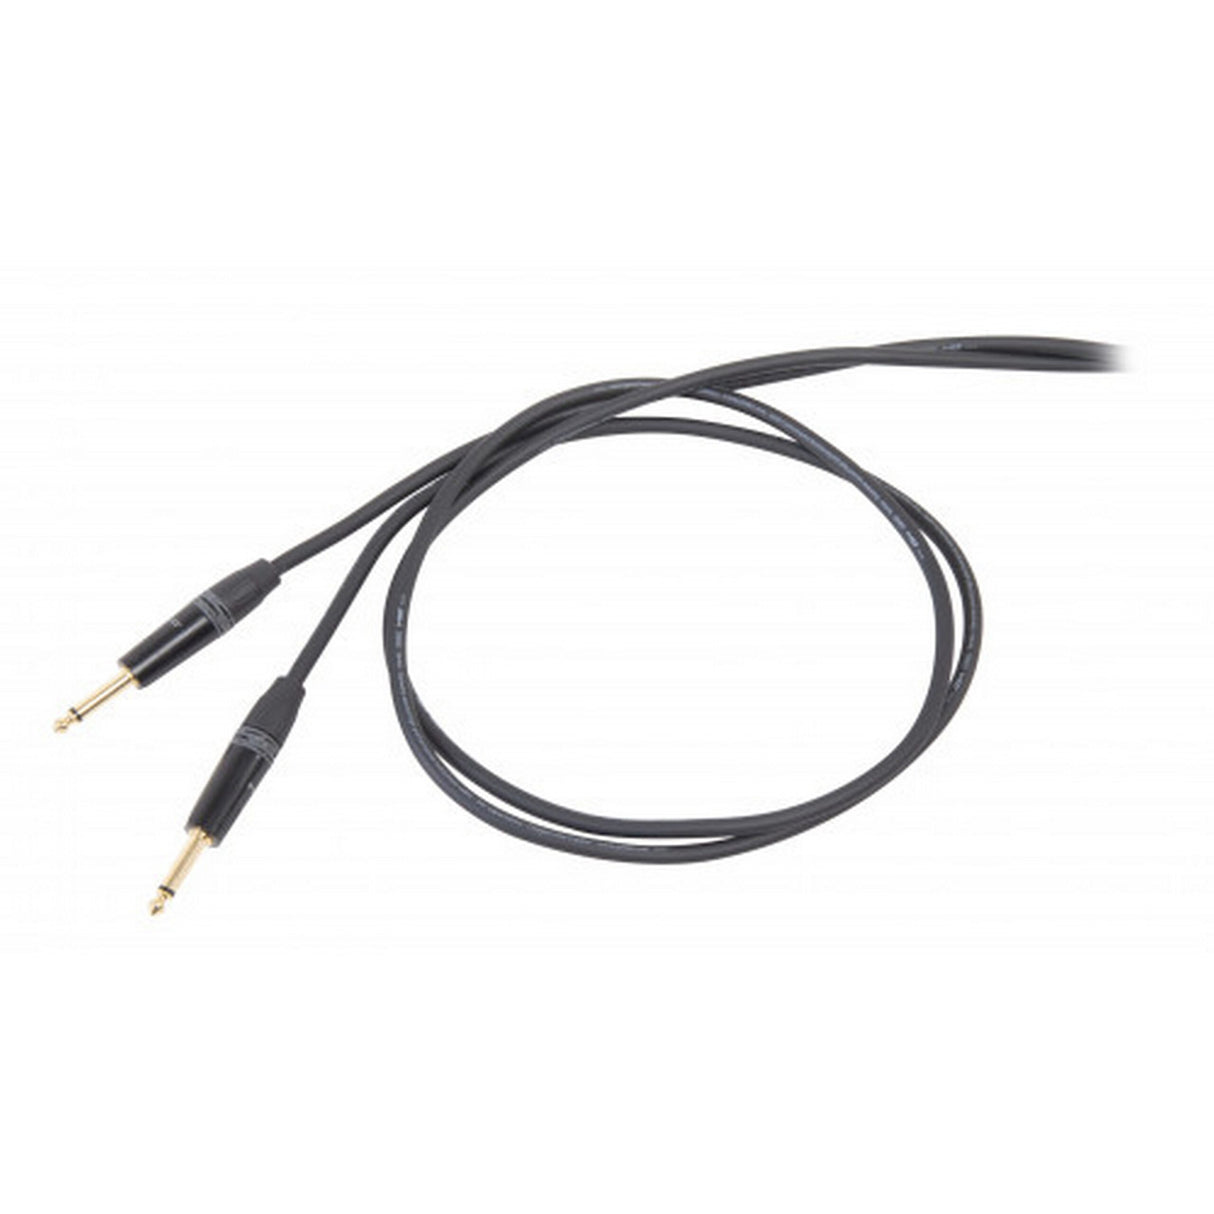 DieHard DHS100LU1 ONEHERO Professional Instrument Cable, 1 m